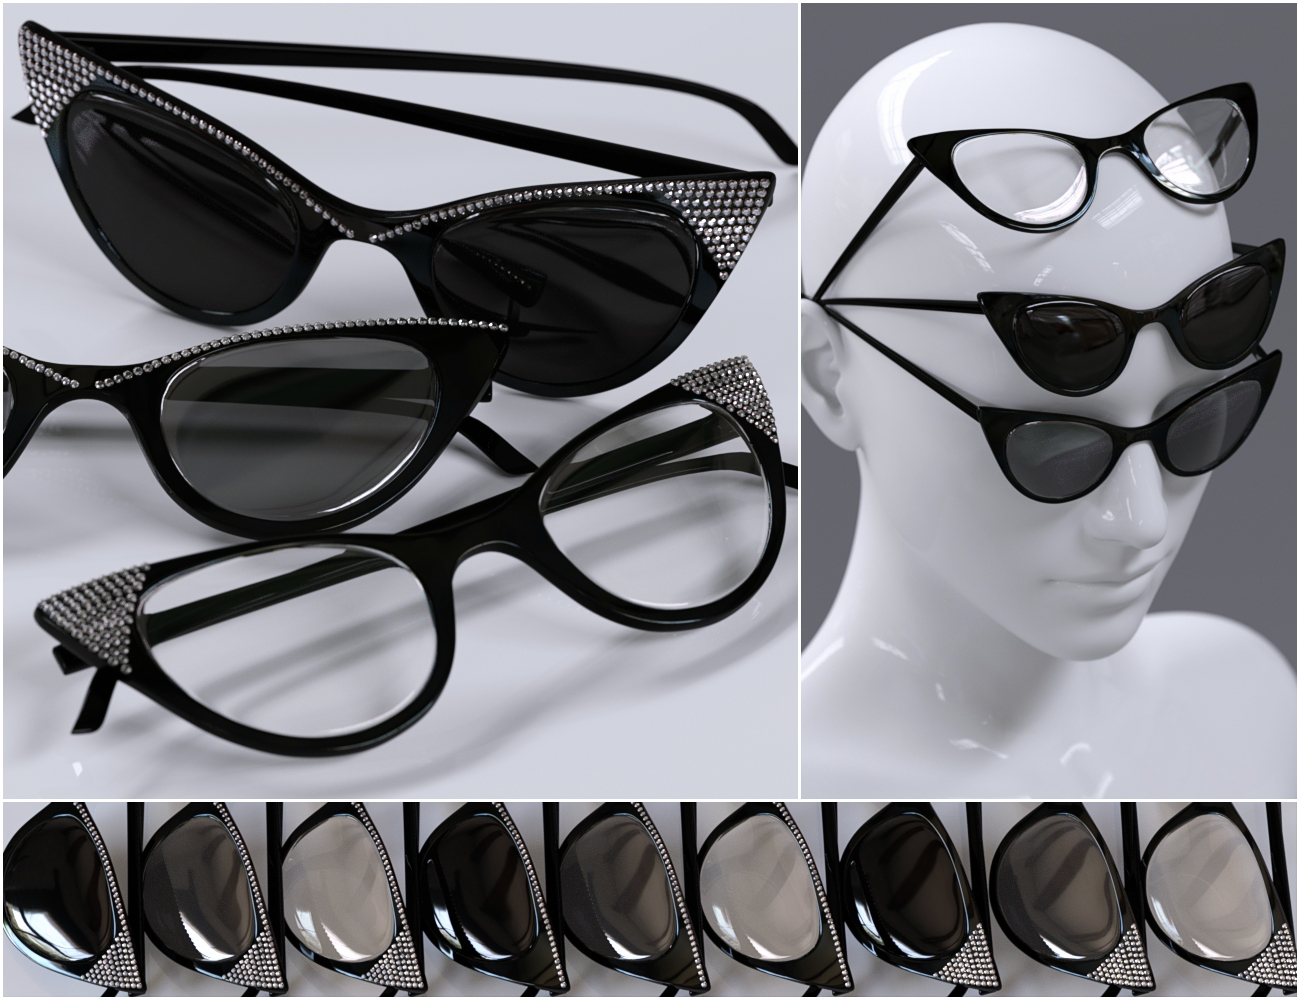 VRV Raine Glasses by: VRVirtuososEyeStorm, 3D Models by Daz 3D